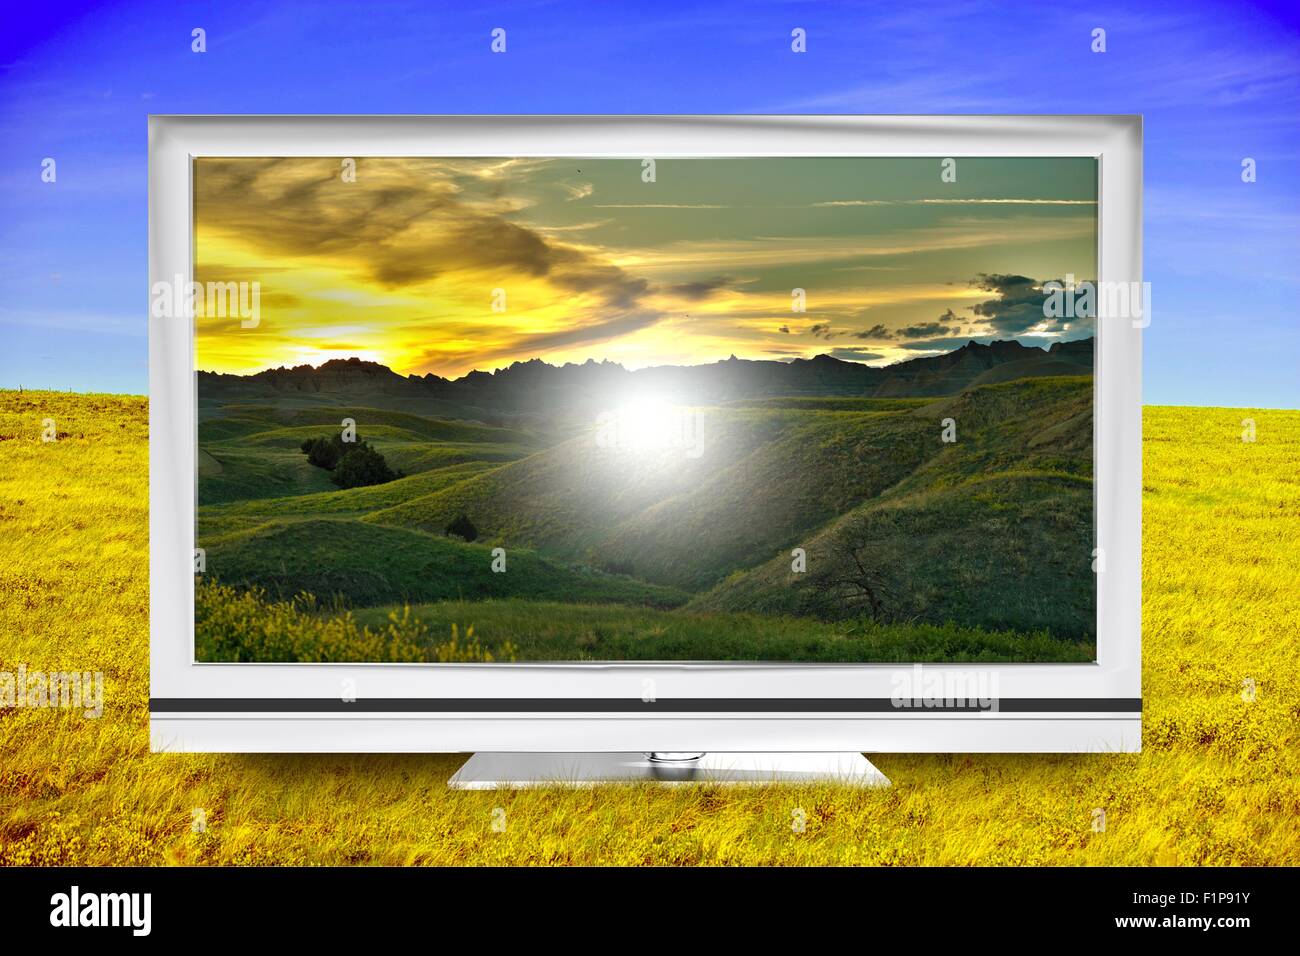 Earth TV. Plasma TV on the Summer Meadow. Displaying Beautiful Landscape. Travel Theme Illustration. Stock Photo